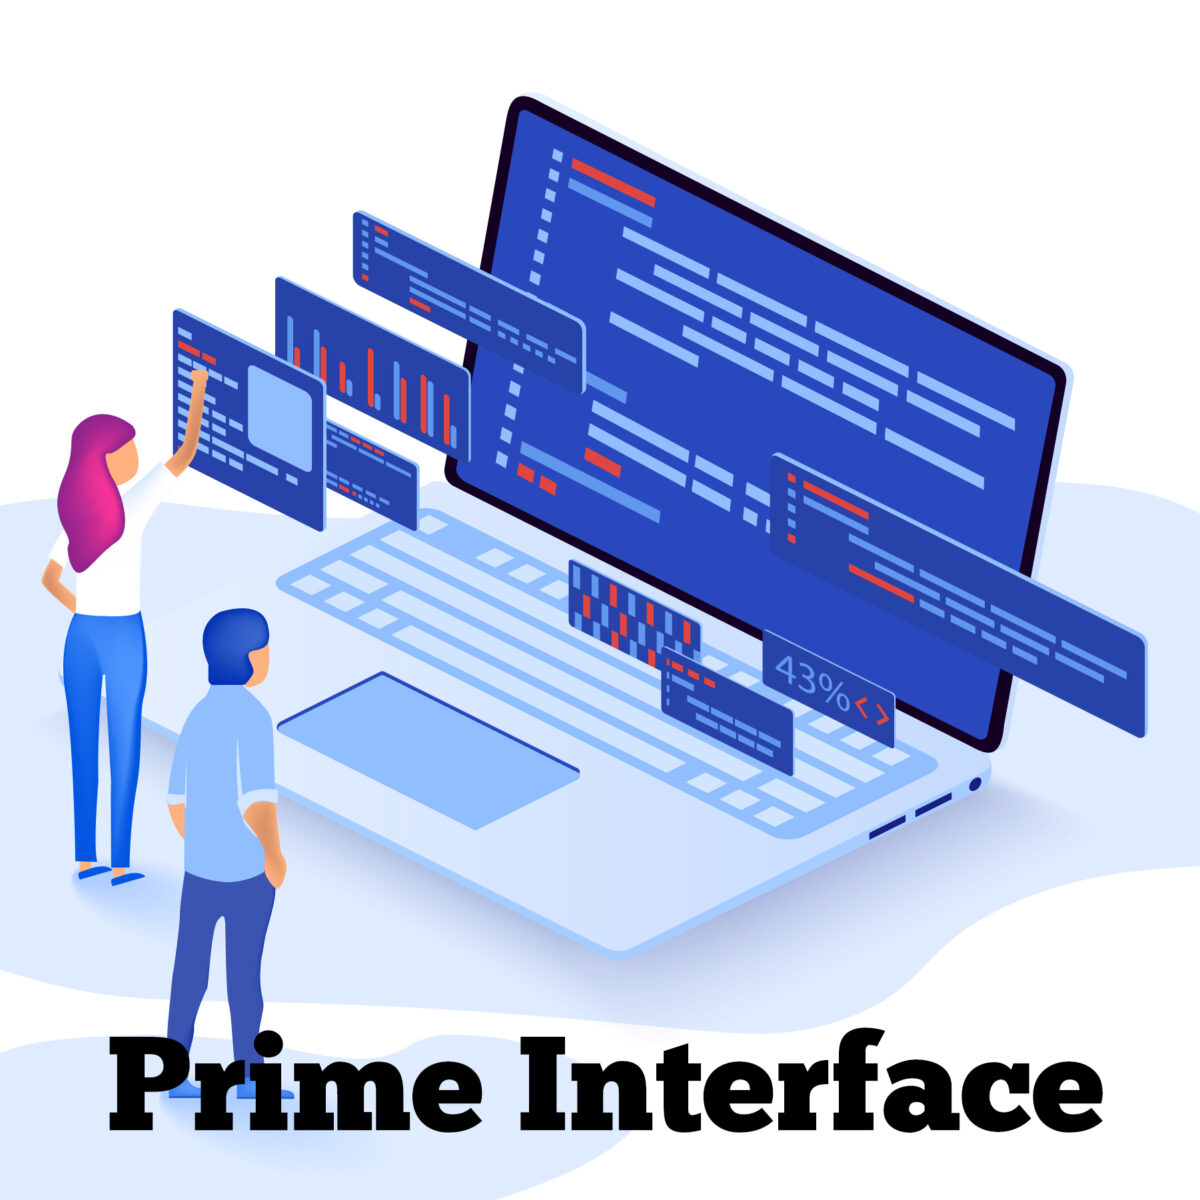 Prime Interface